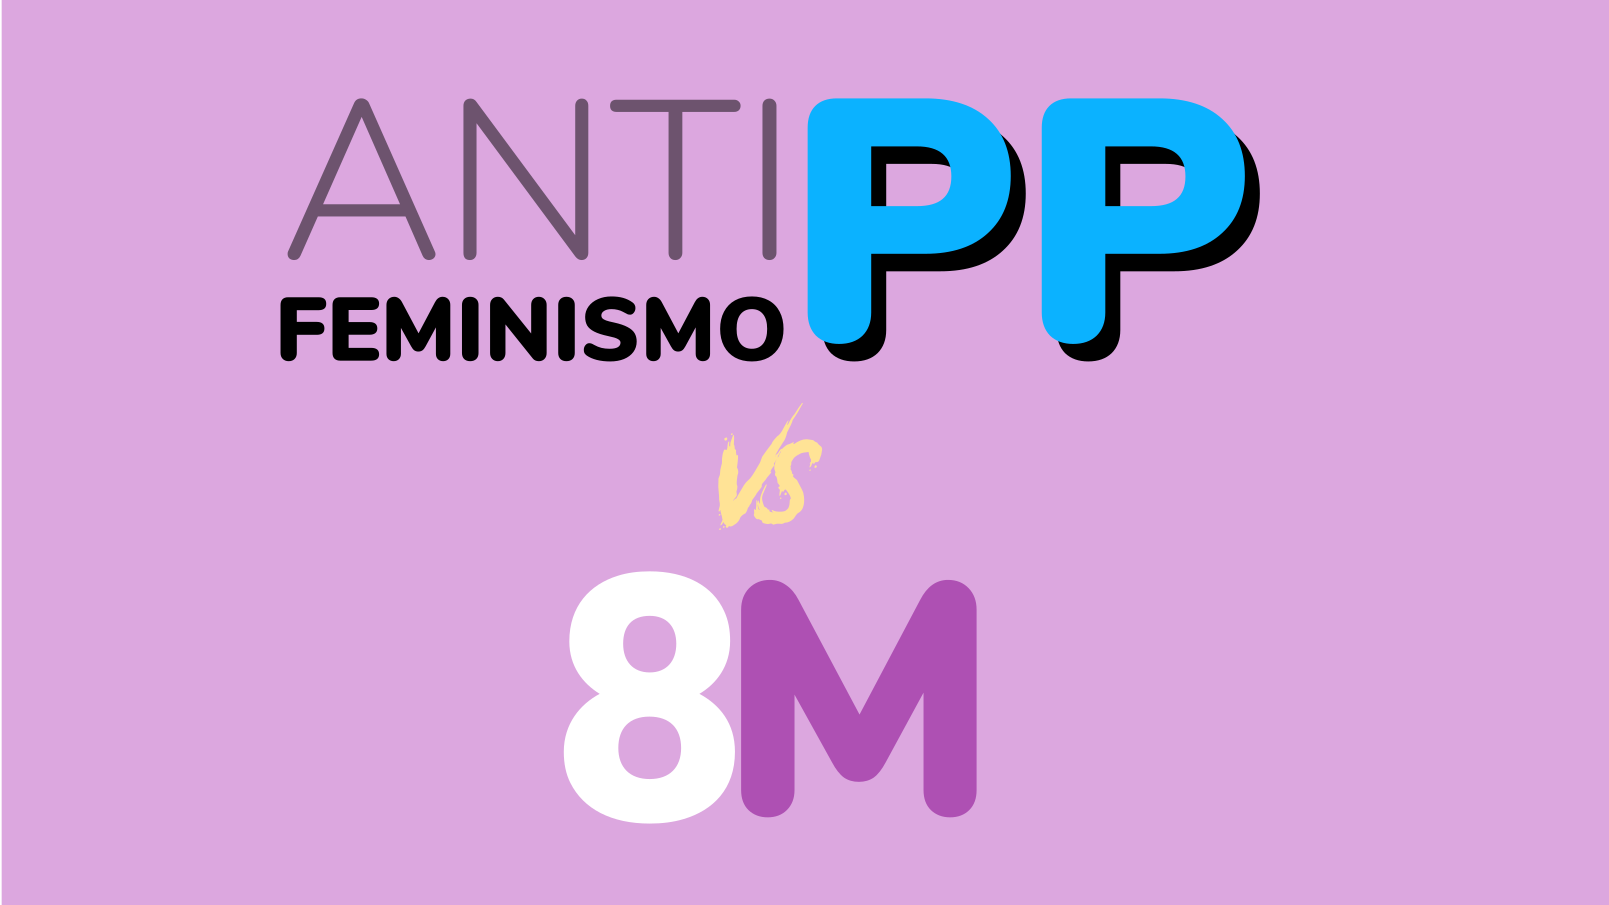 antifeminismoPP